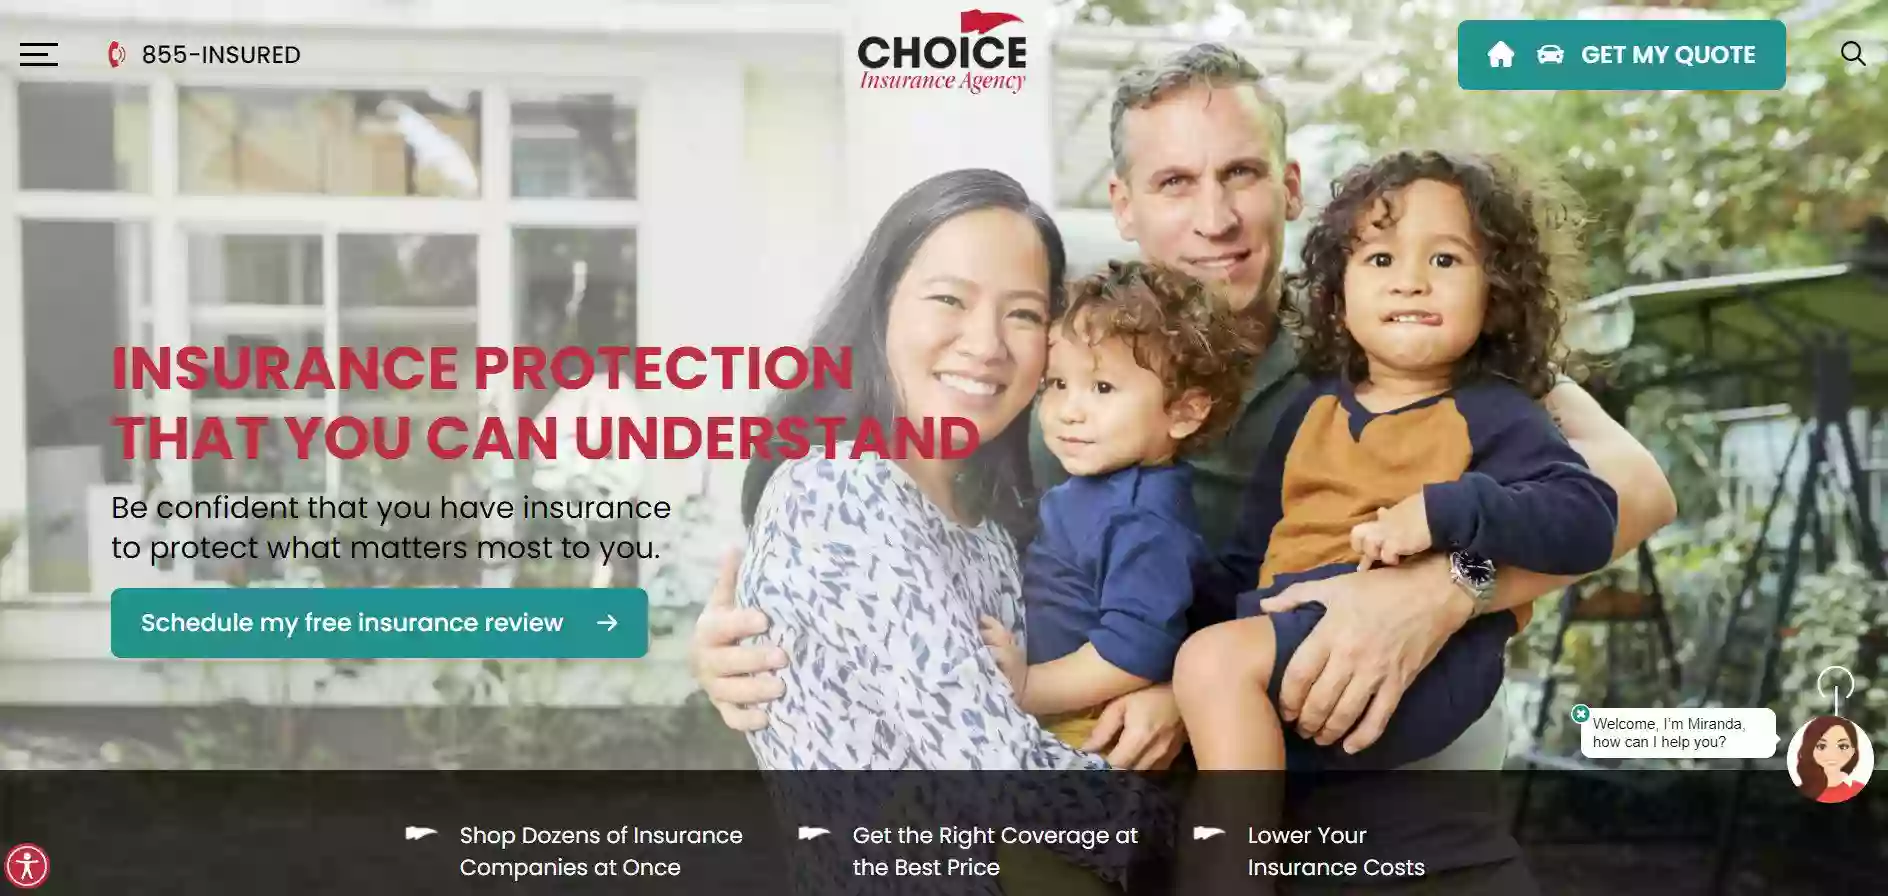 Choice Insurance Agency - Delaware